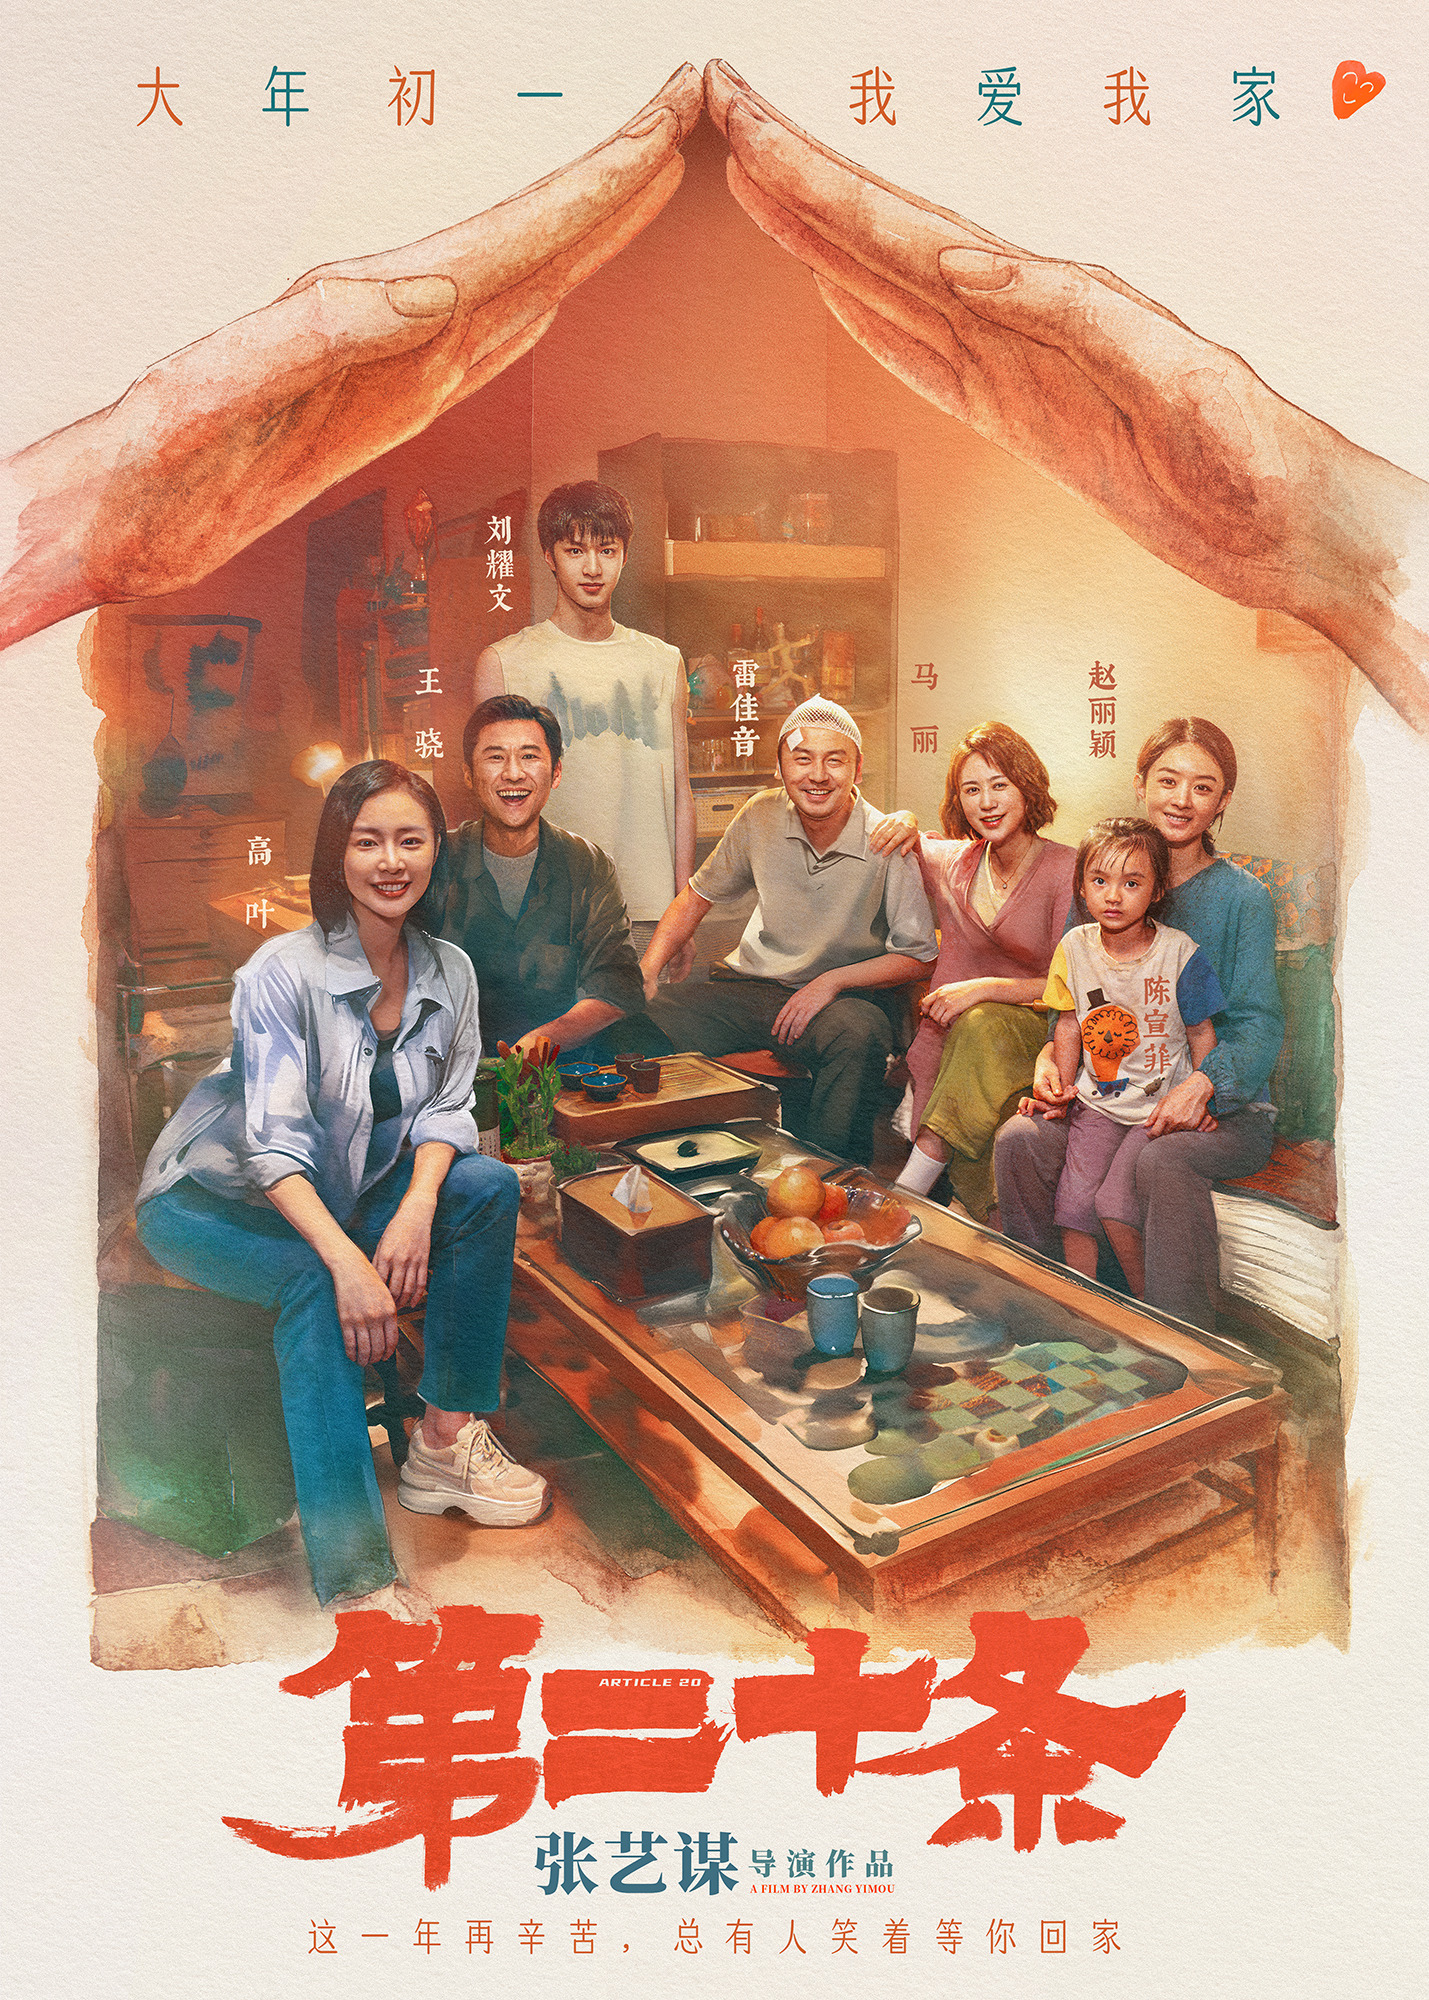 Mega Sized Movie Poster Image for Di er shi tiao 